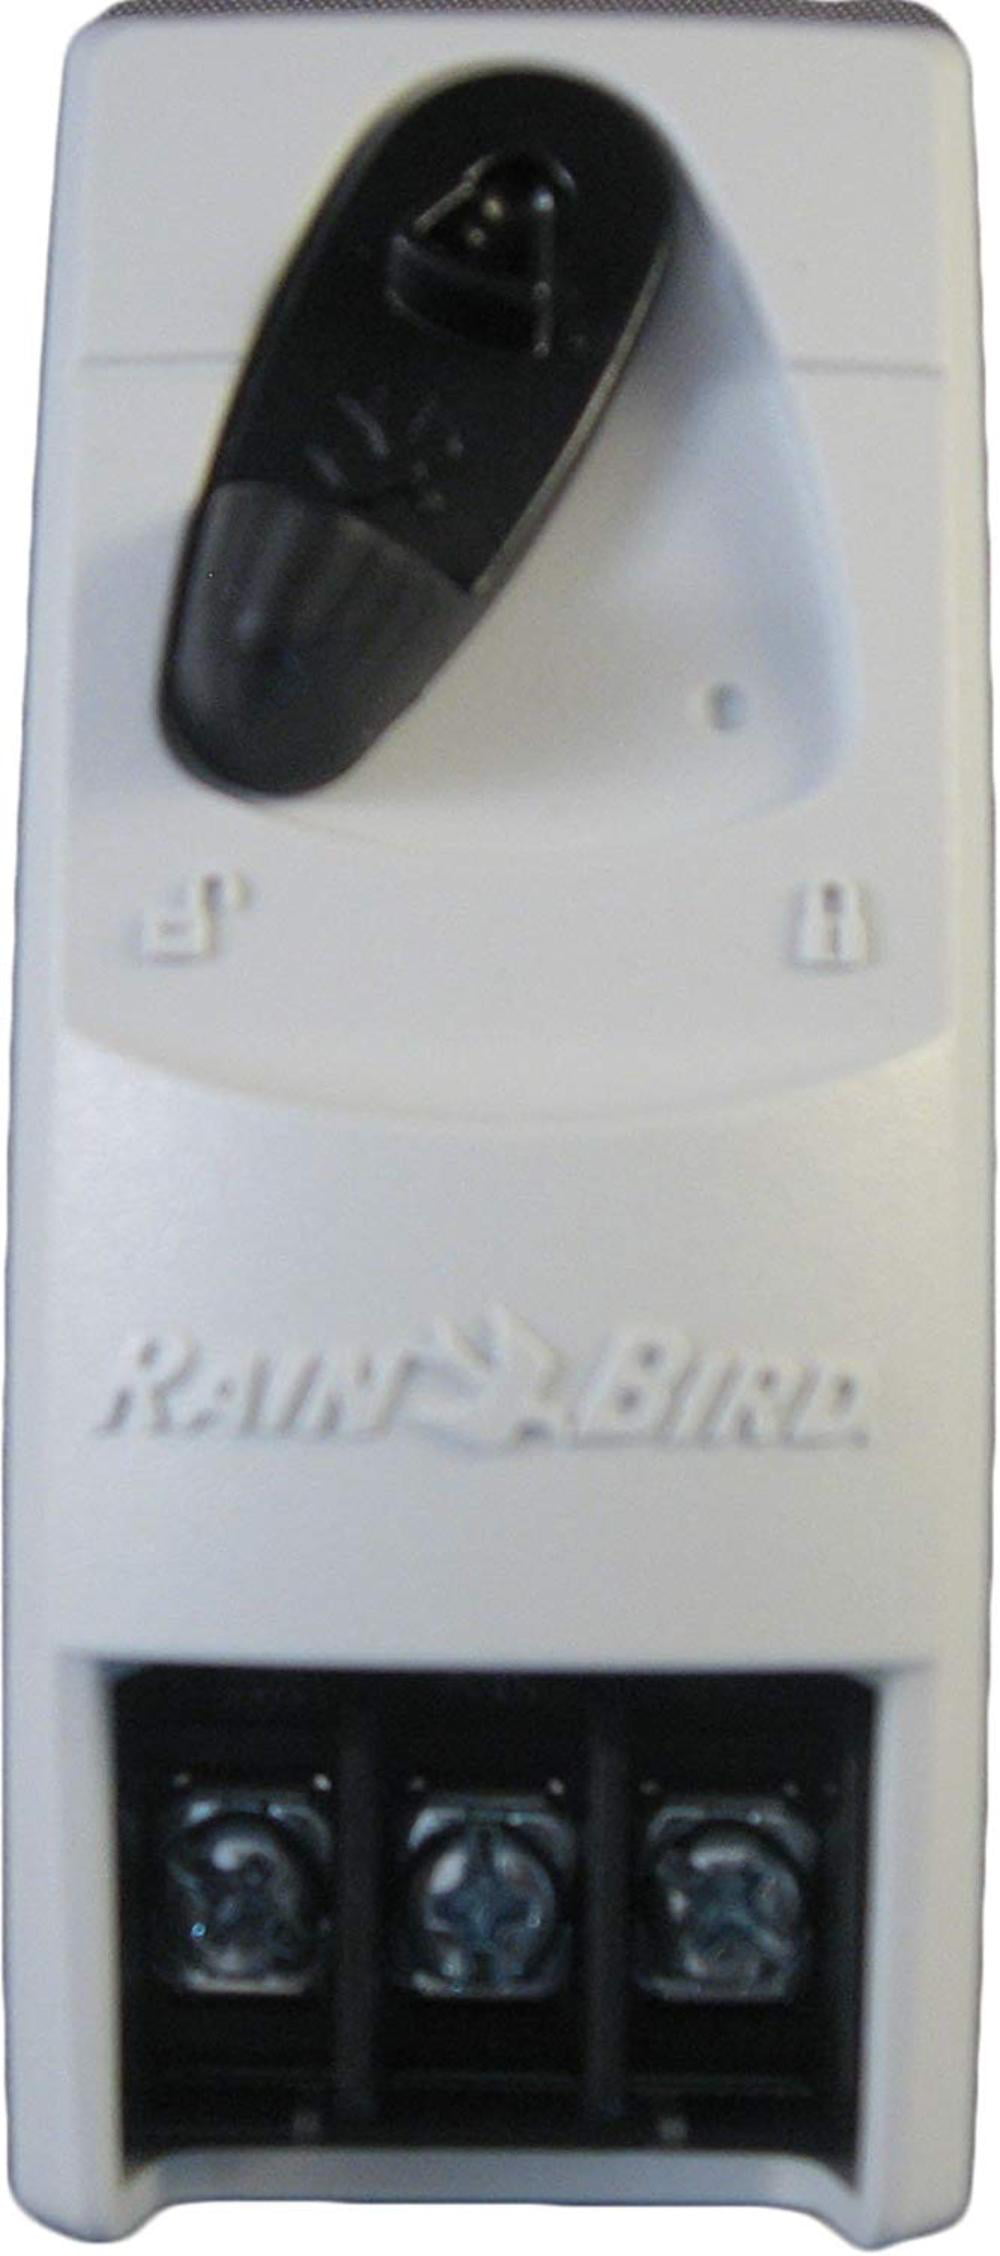 Esp-sm3 Rain Bird 3 Station Expansion Module for ESP Irrigation Controllers for sale online 